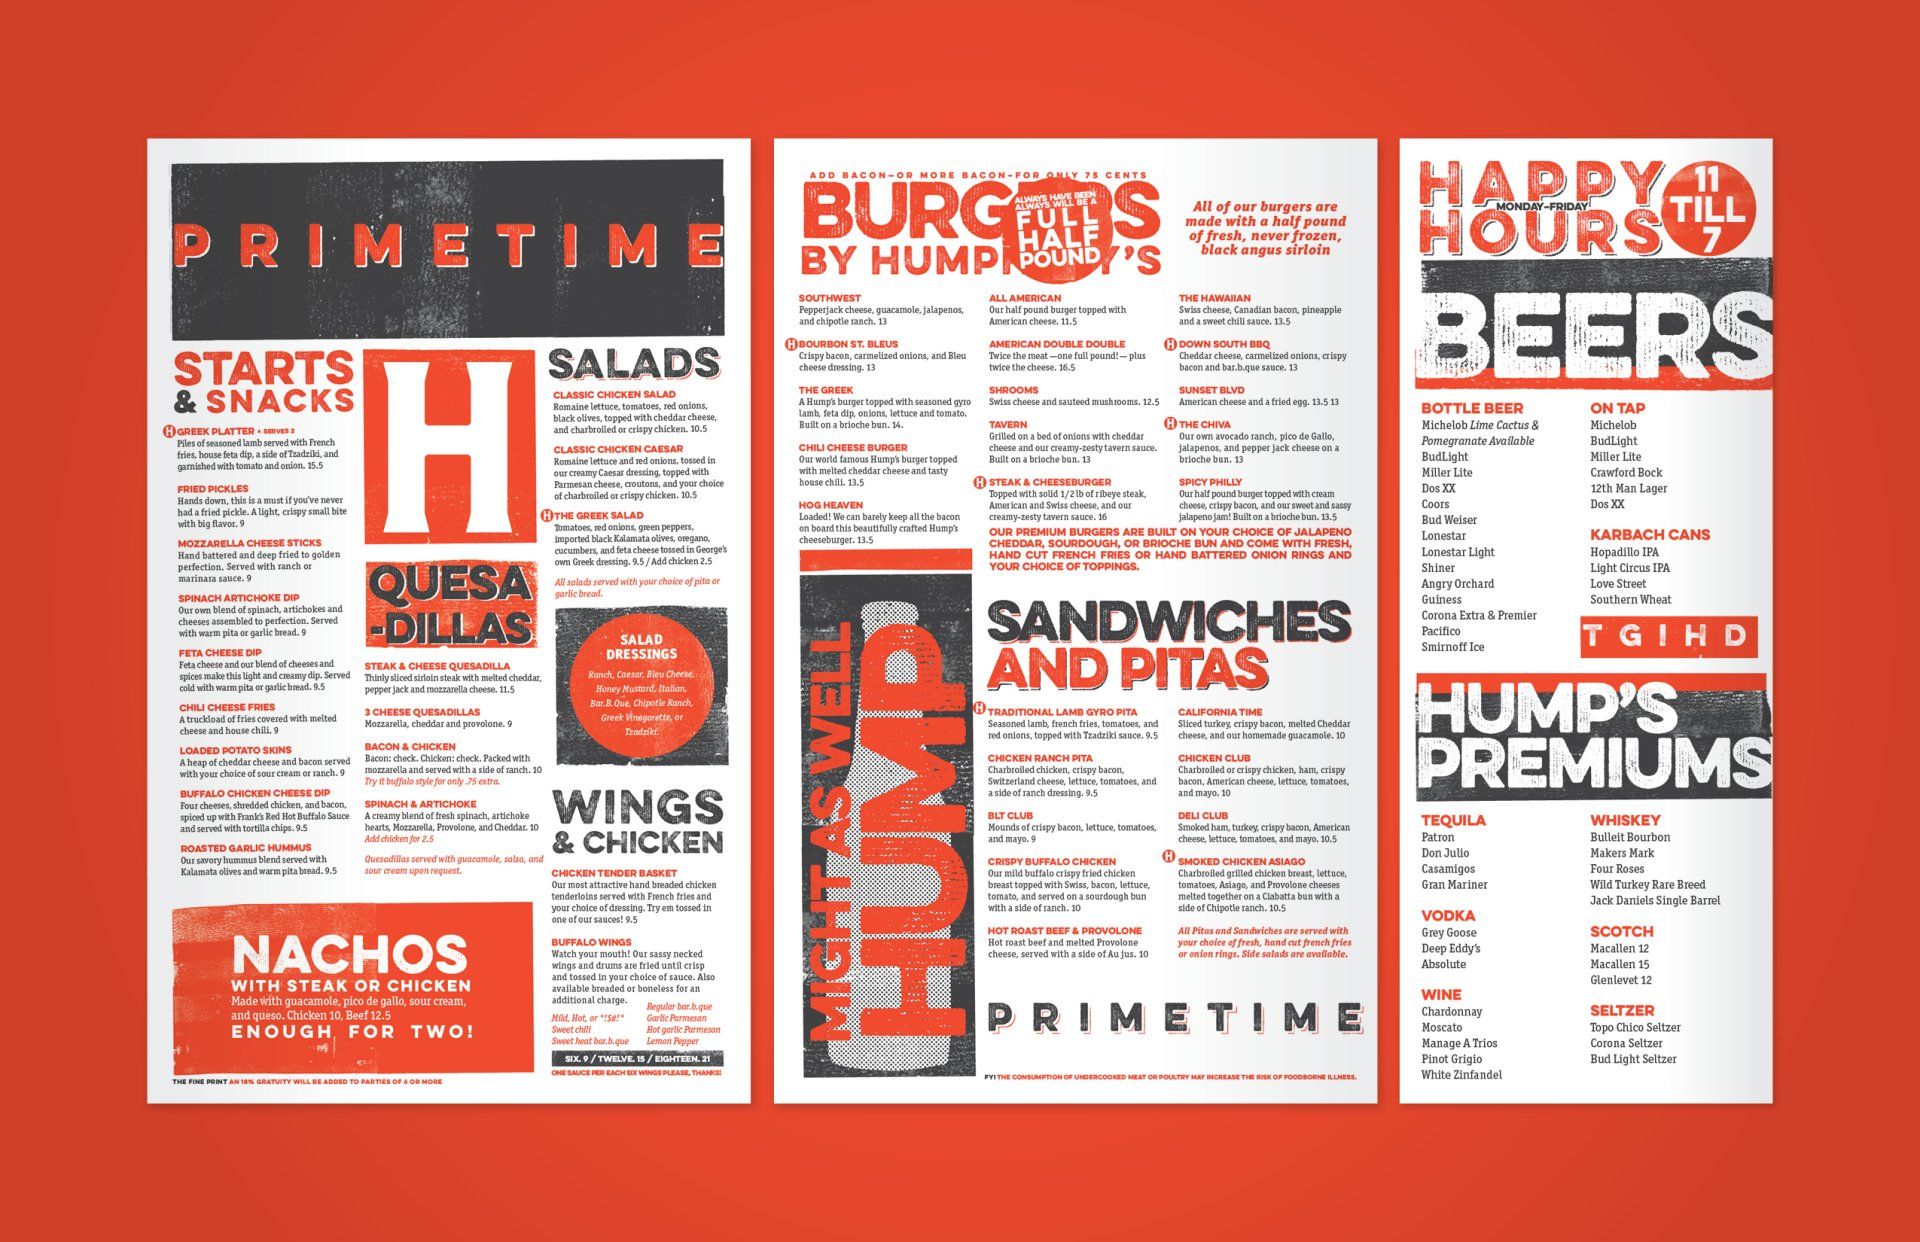 Image of Humphrey's primetime menu.